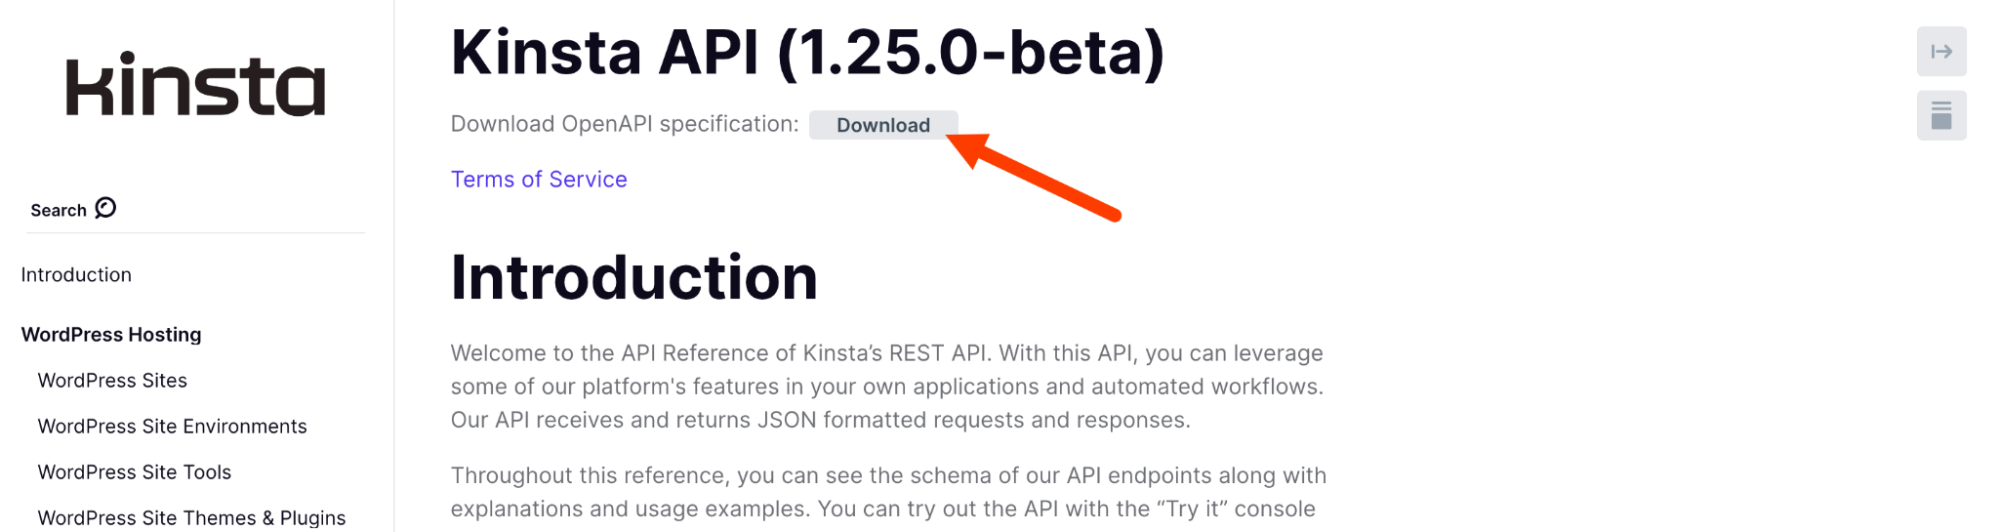 Kinsta API OpenAPI specification